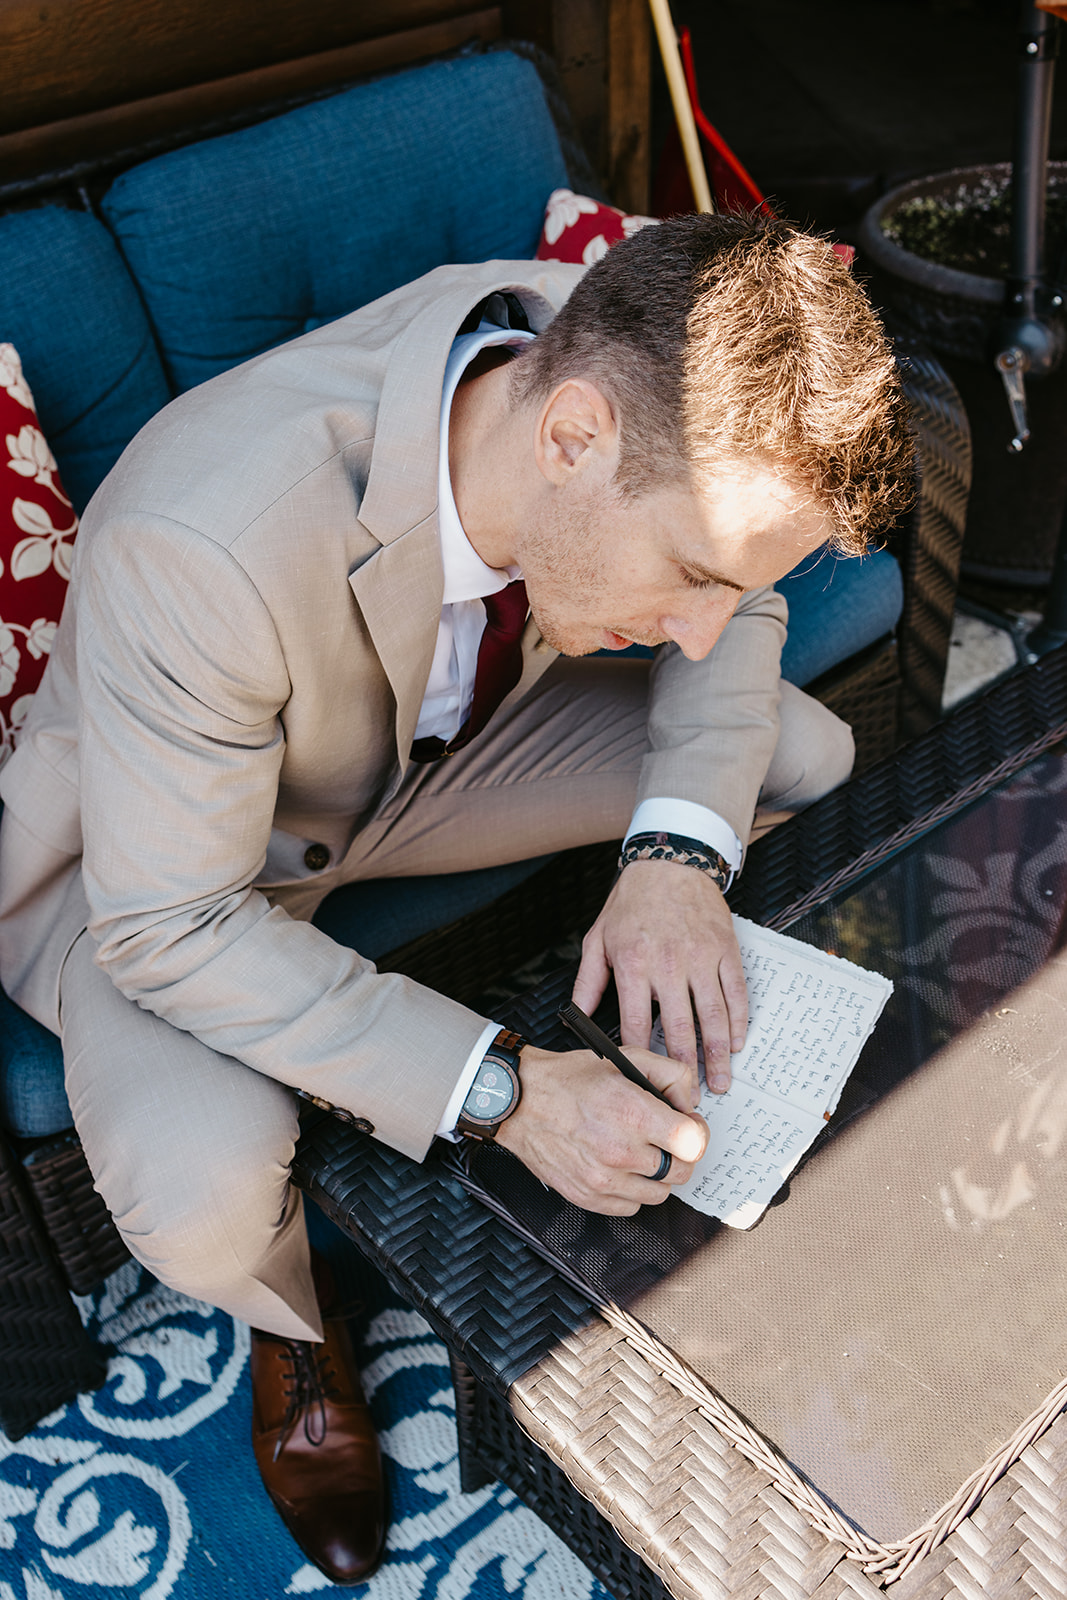 Chris hartwig writing his wedding vows